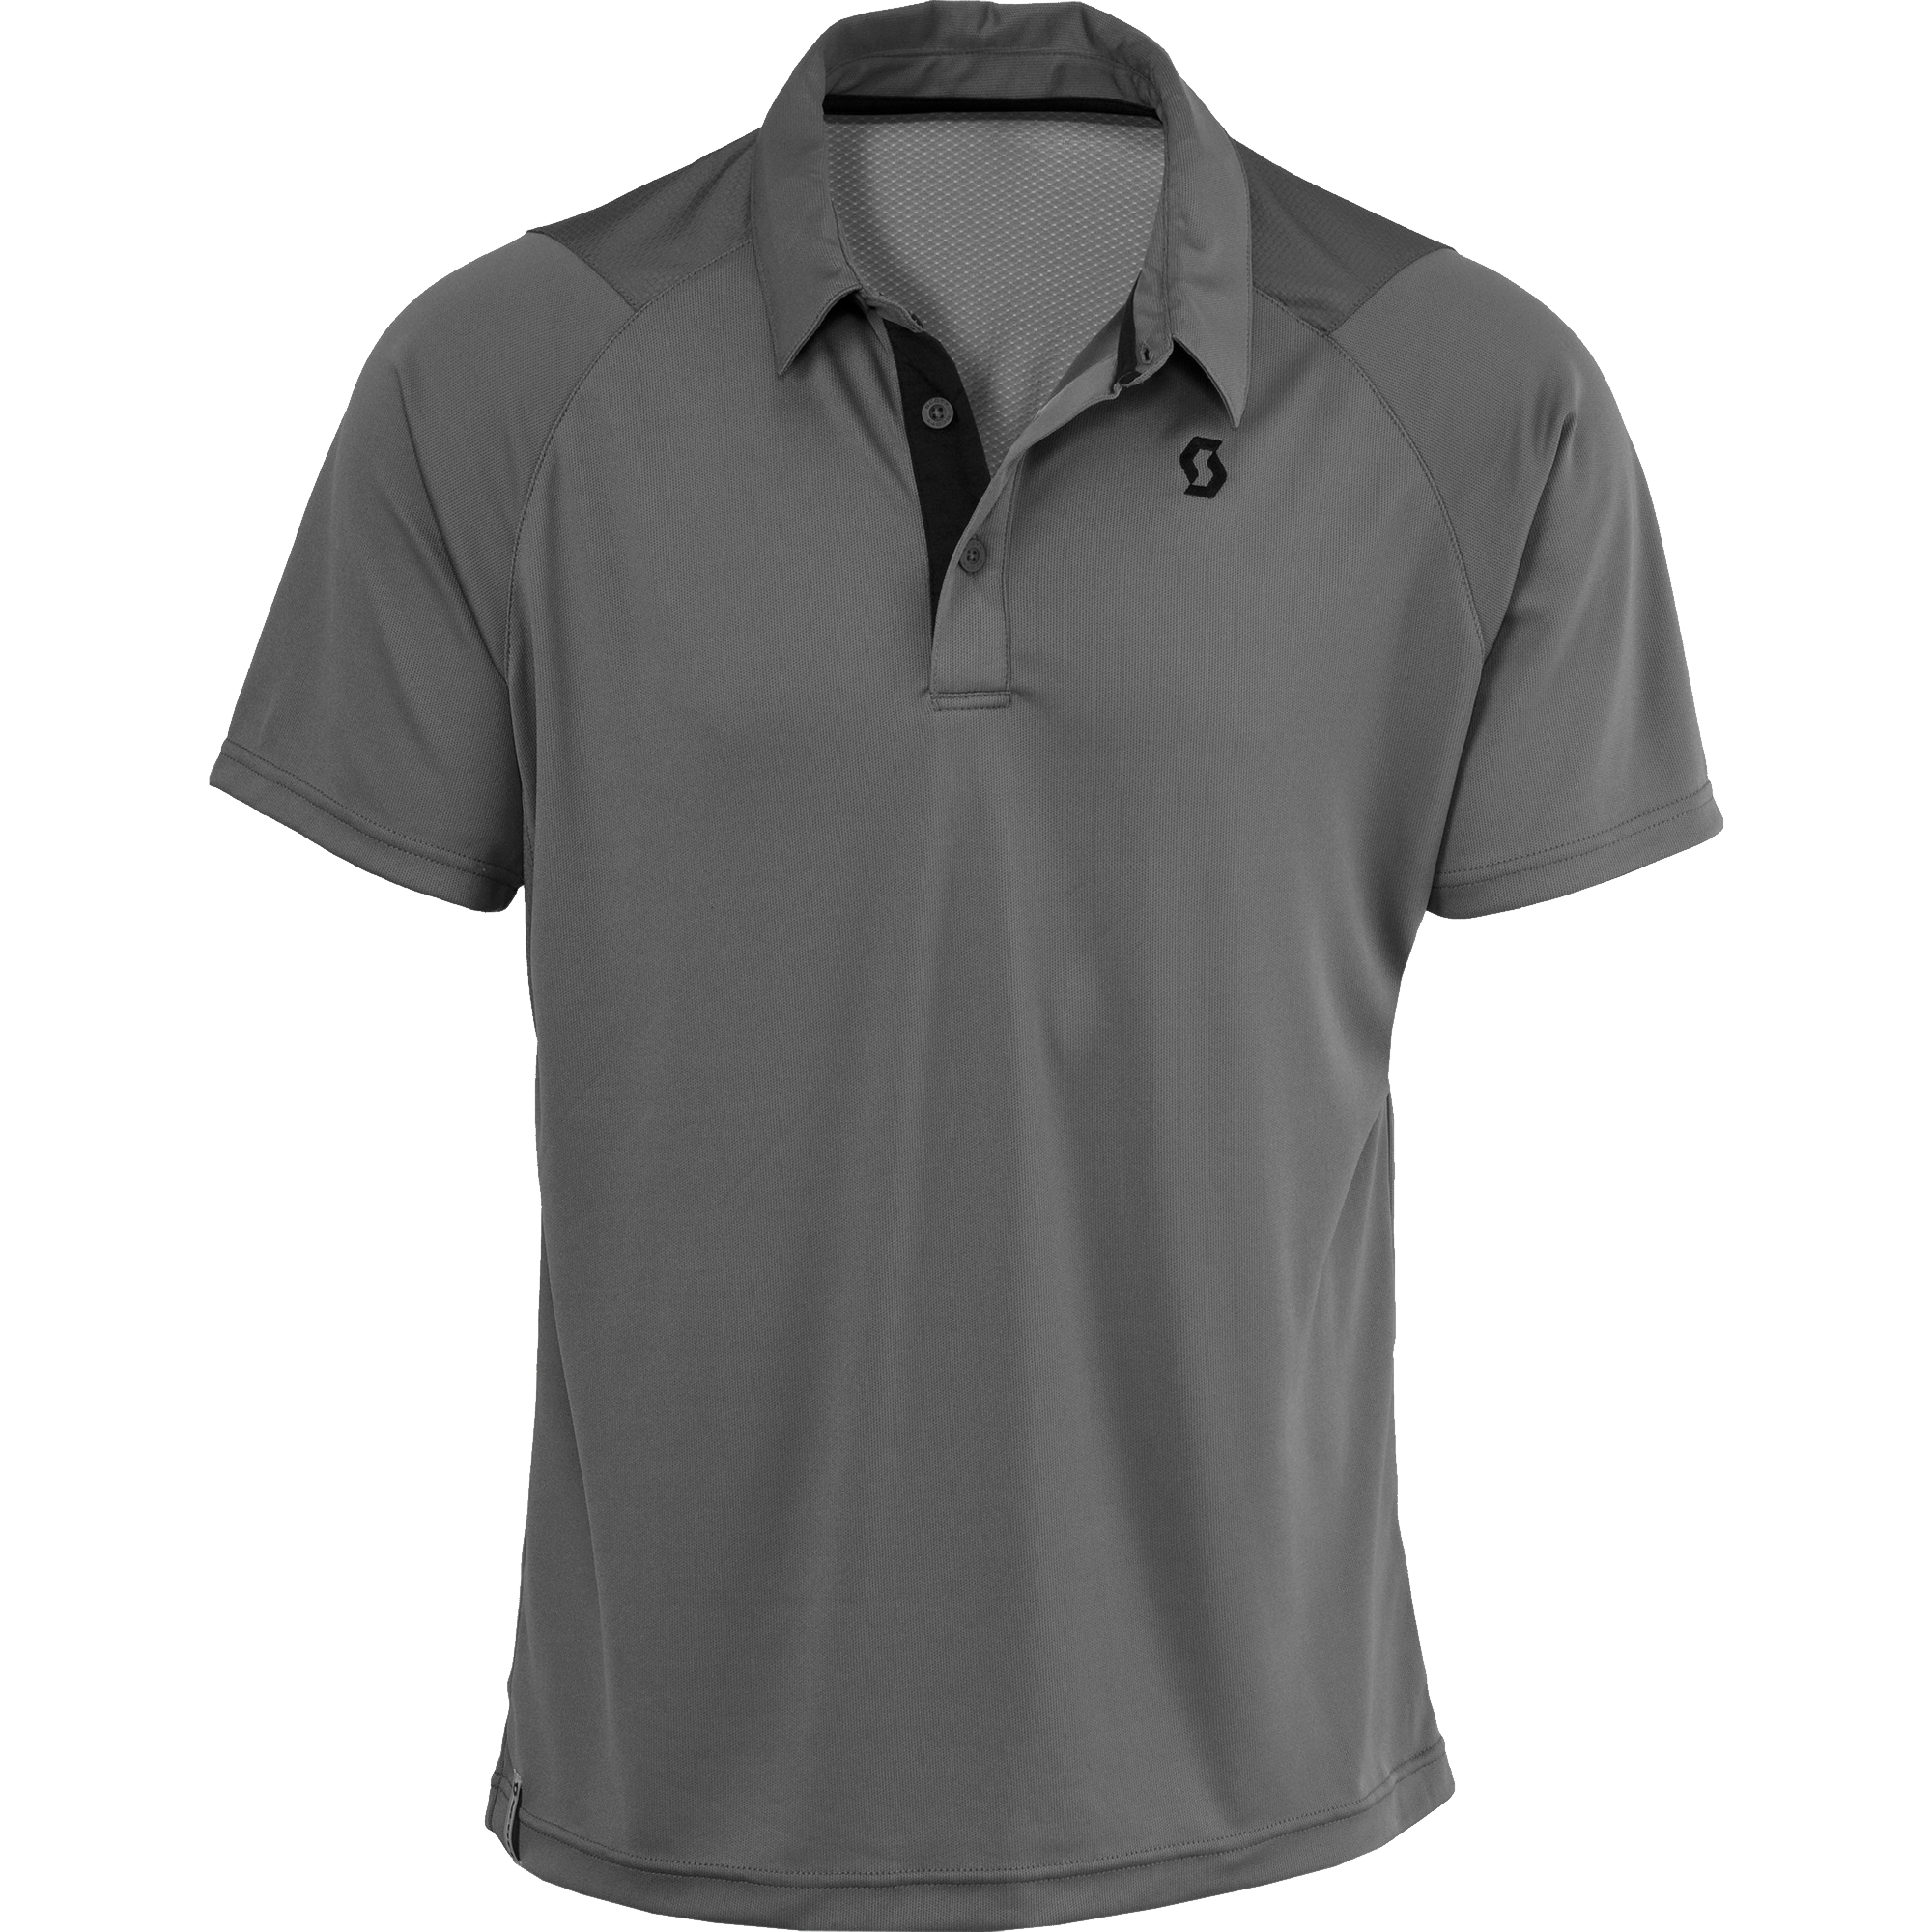 Polo Shirt Png Image - Polo Shirt, Transparent background PNG HD thumbnail